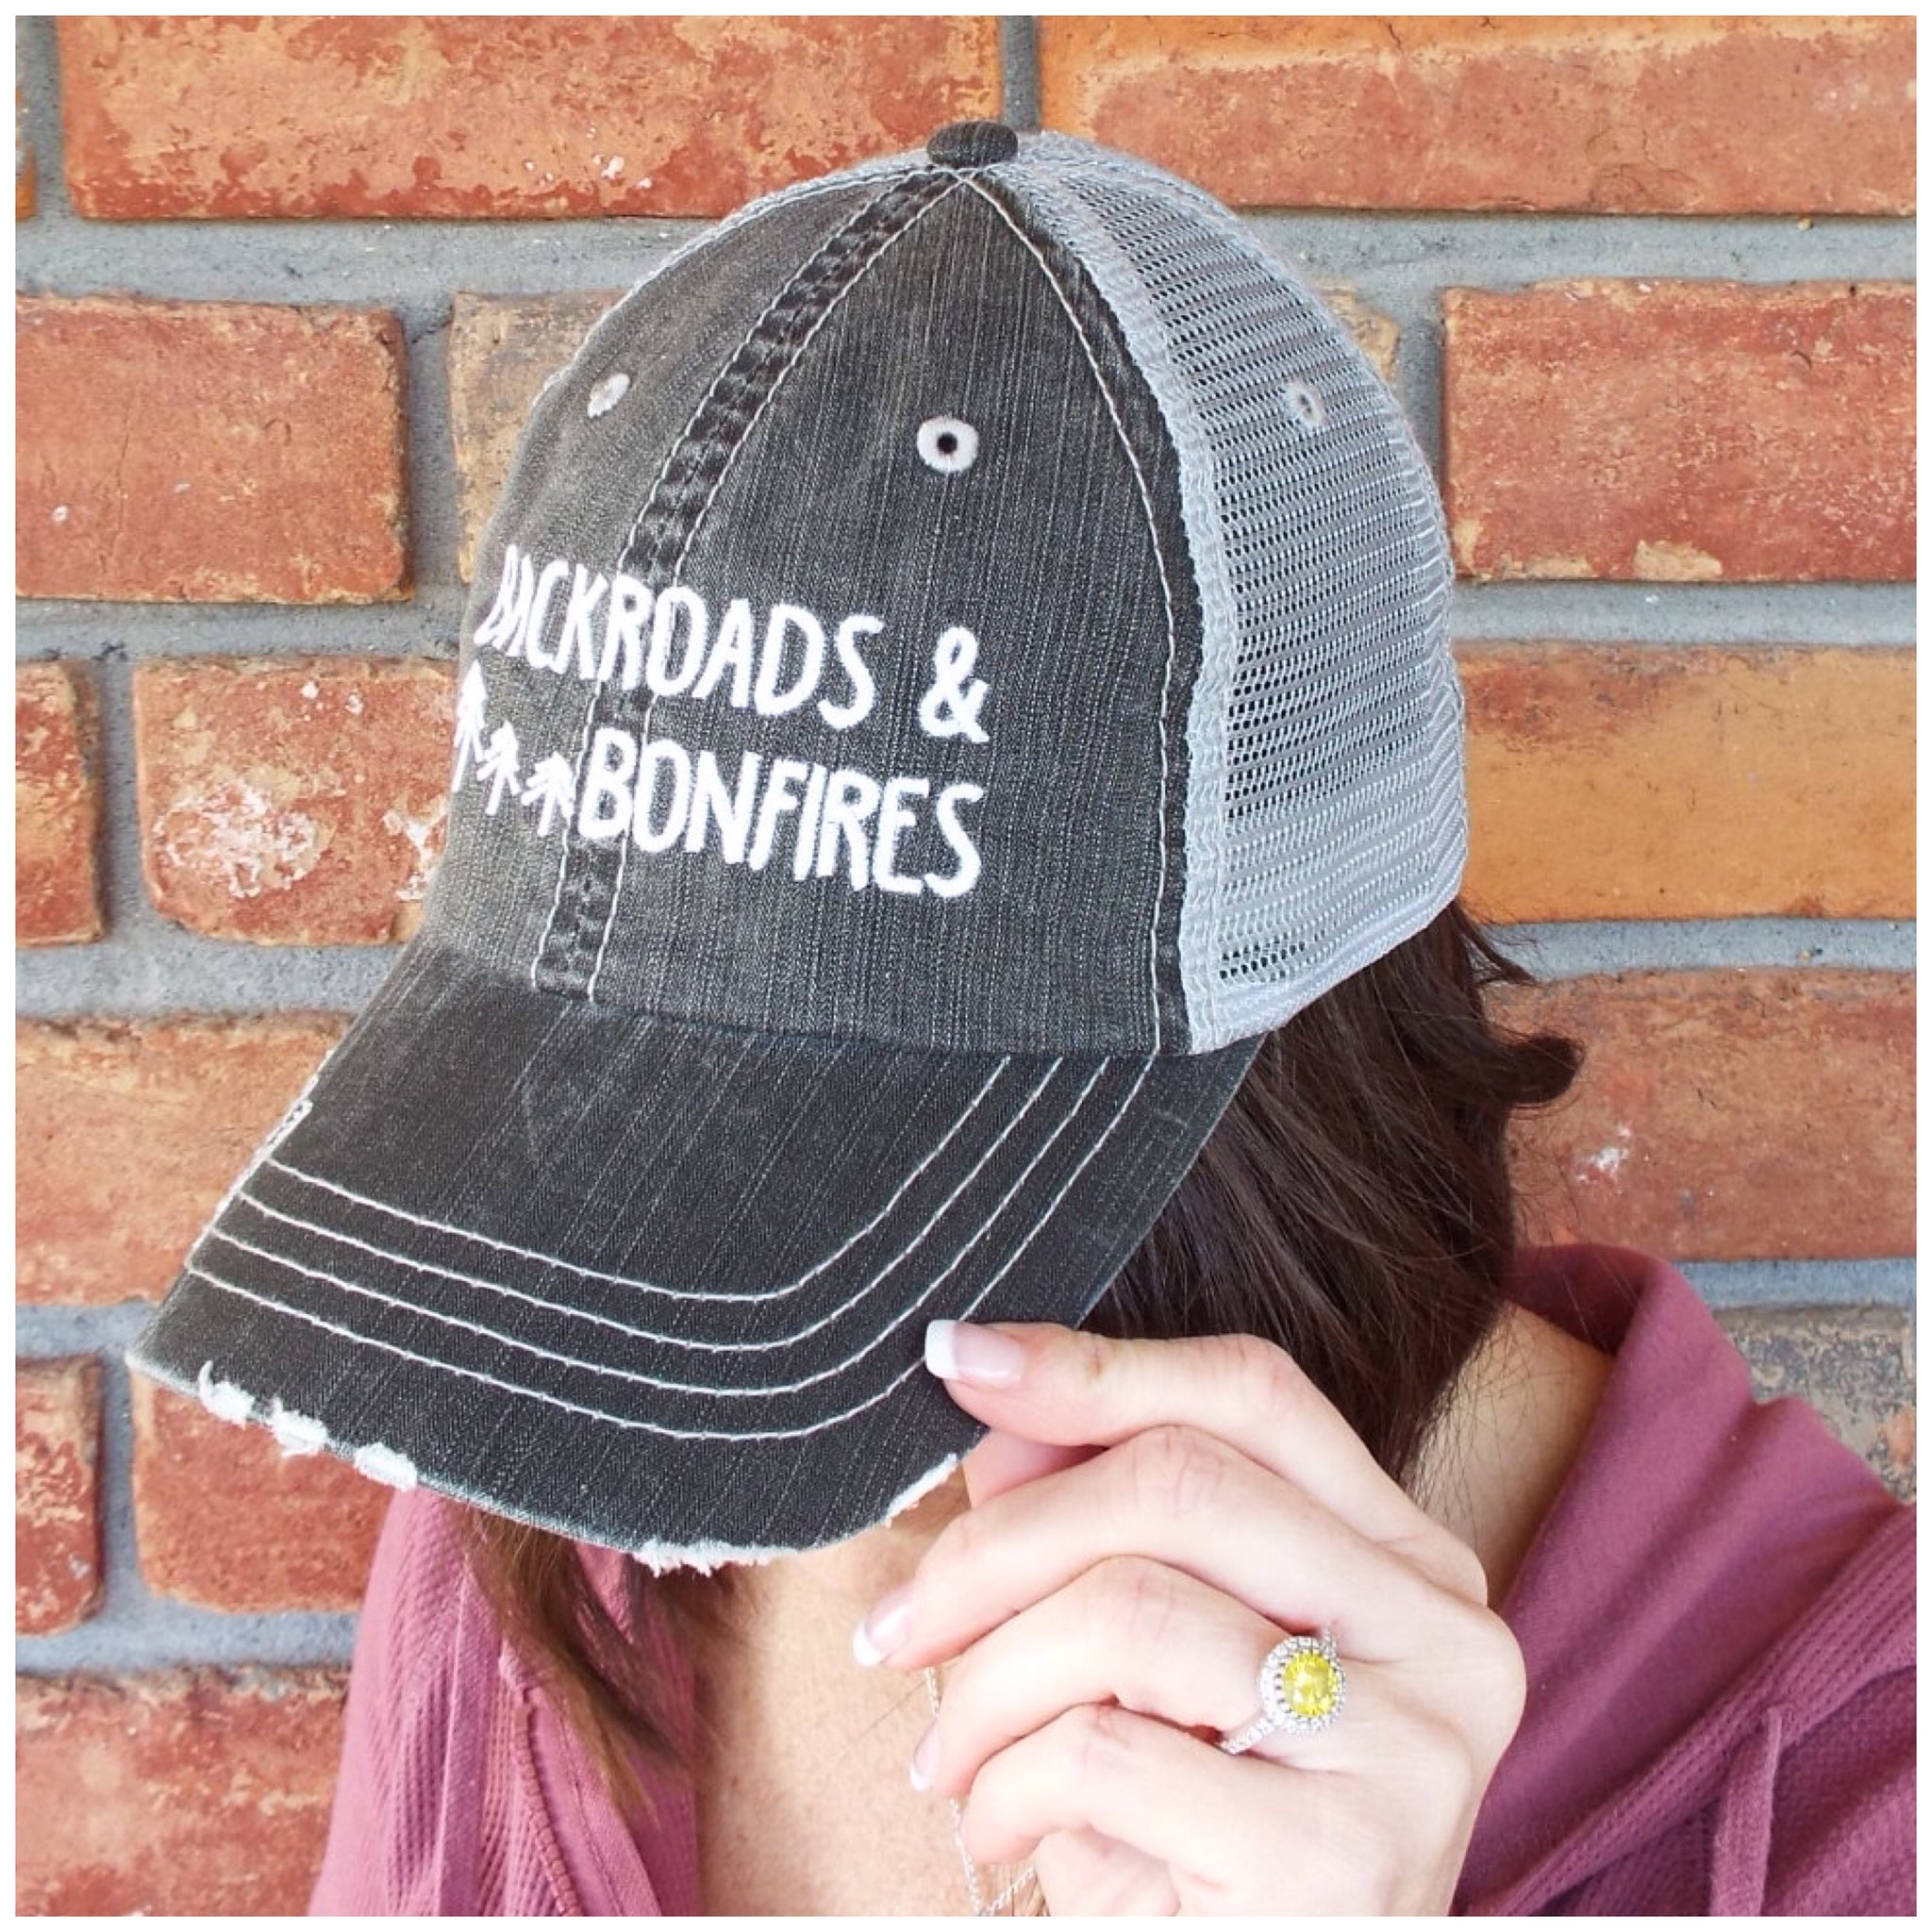 “Backroads & Bonfires” Distressed Embroidered Trucker Hat Mess Back Dark Gray